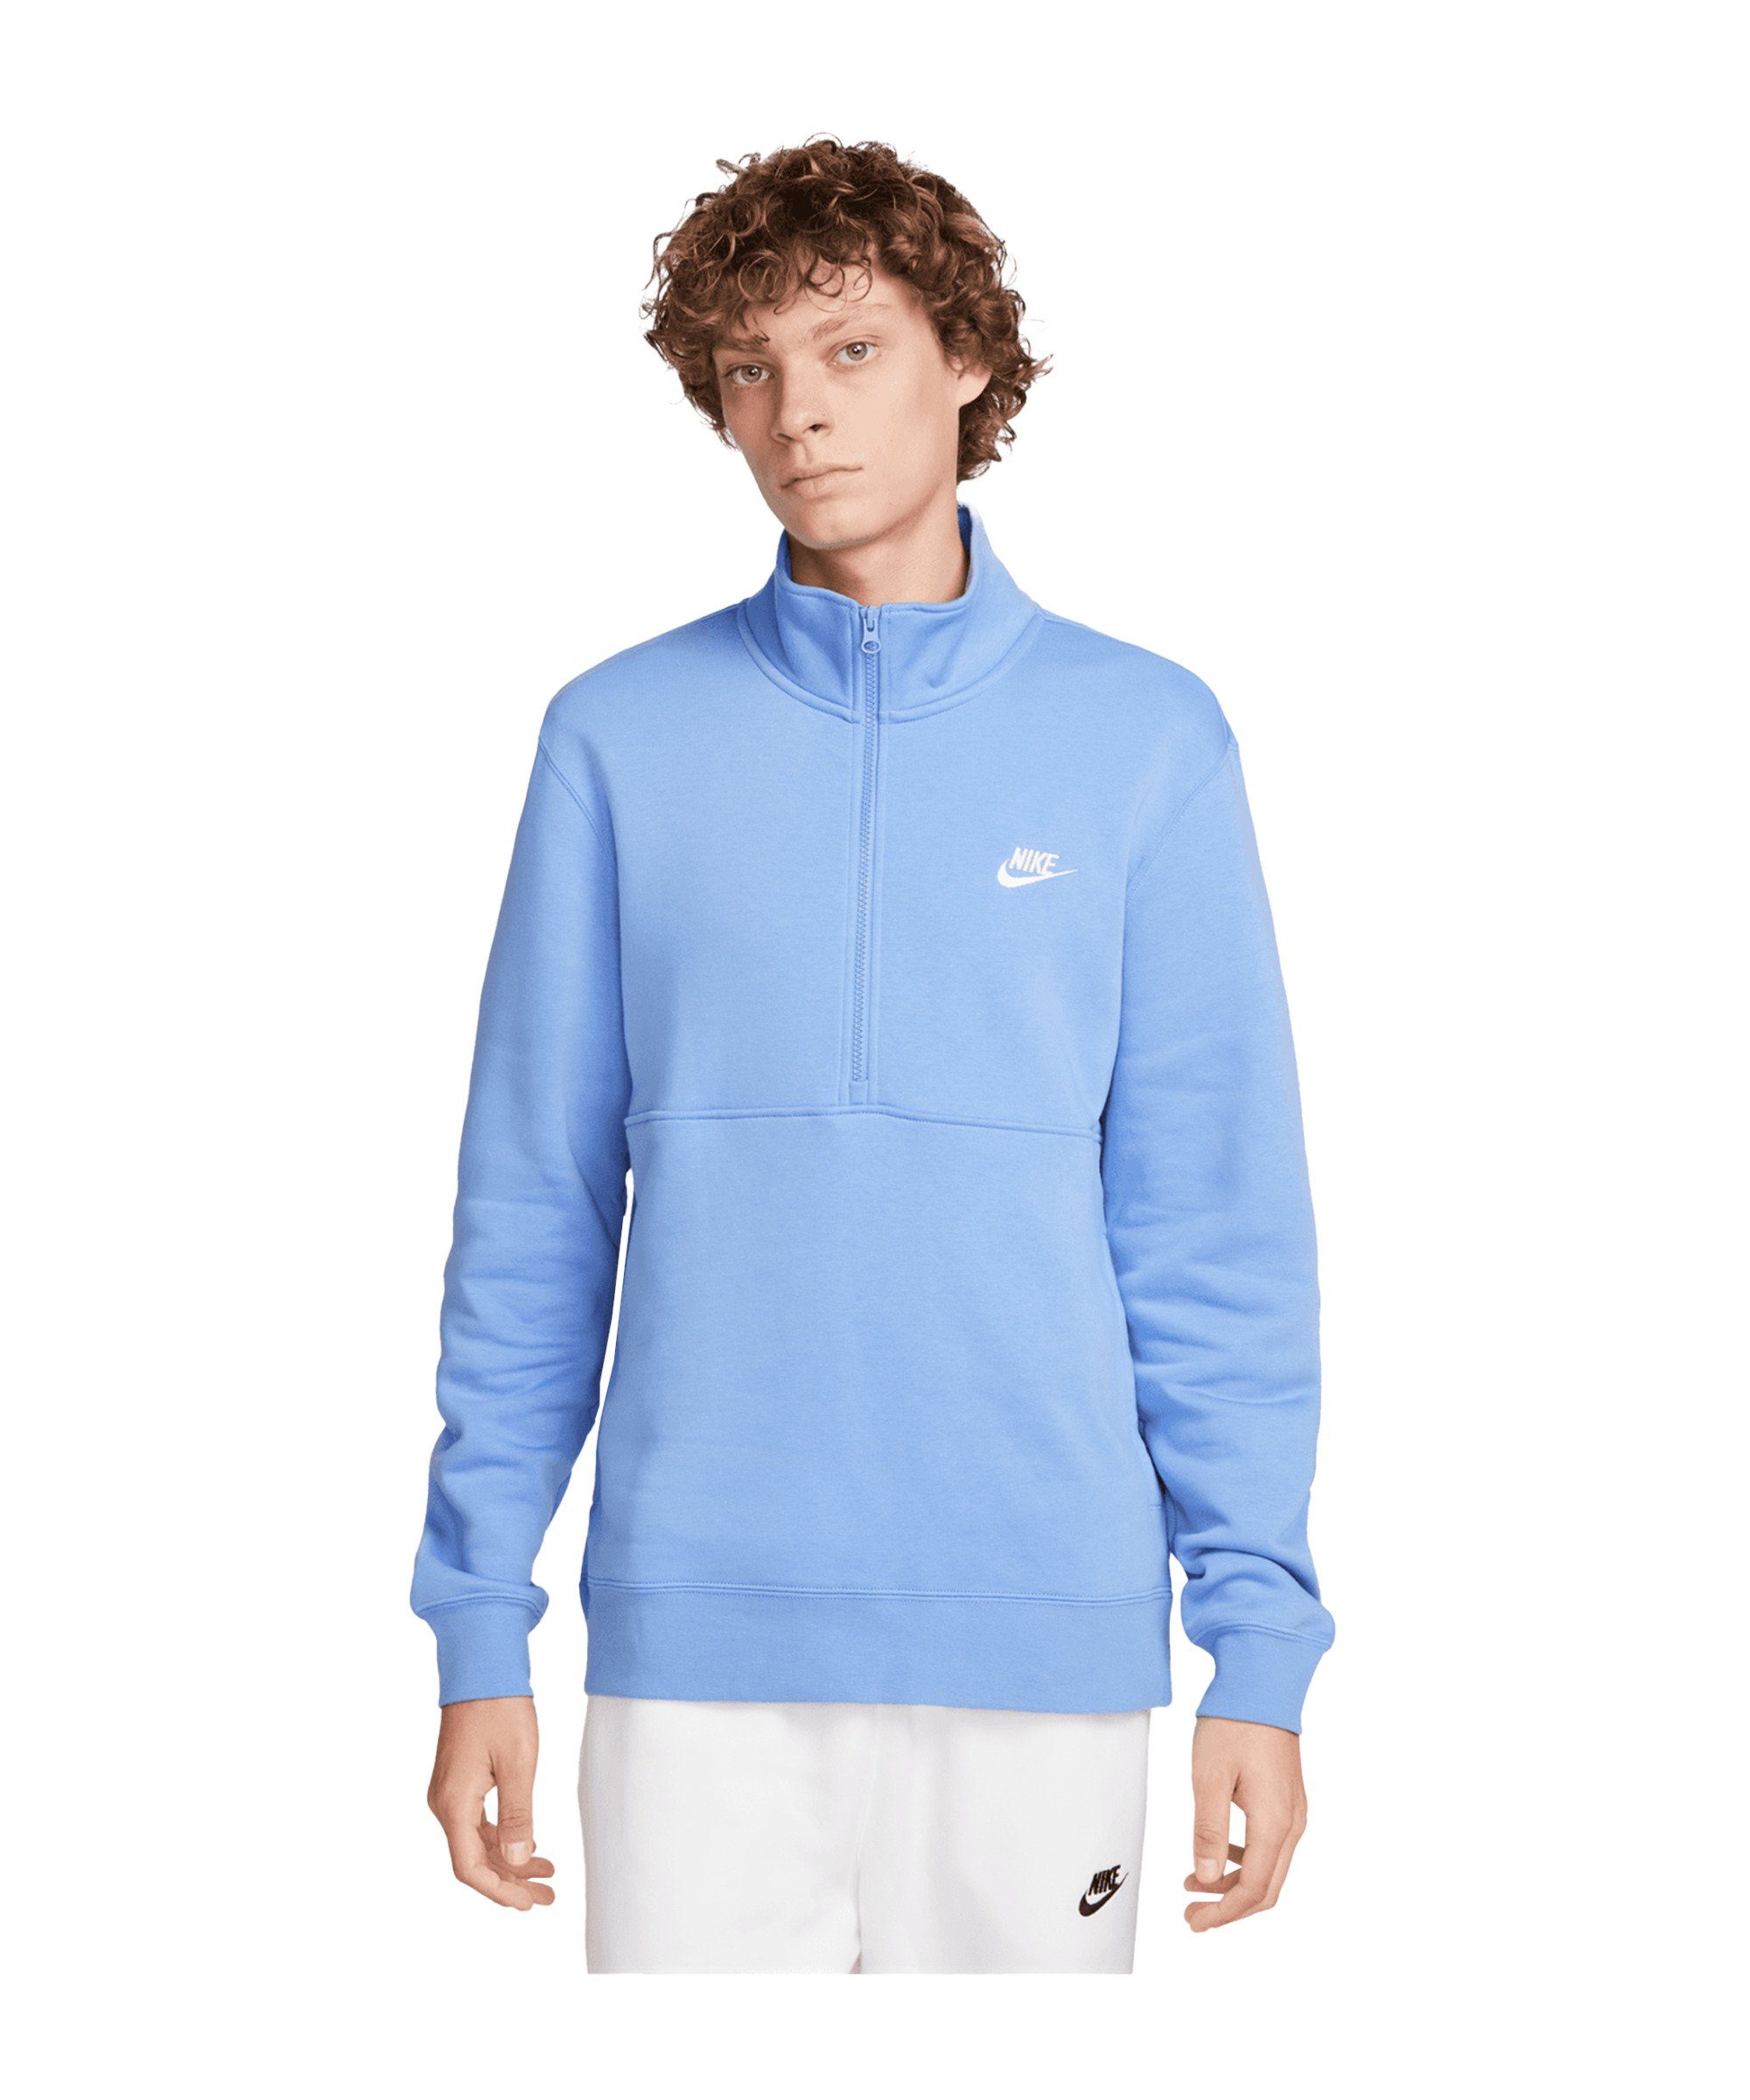 Nike Sportswear Sweatshirt Club HalfZip Sweatshirt blaublauweiss